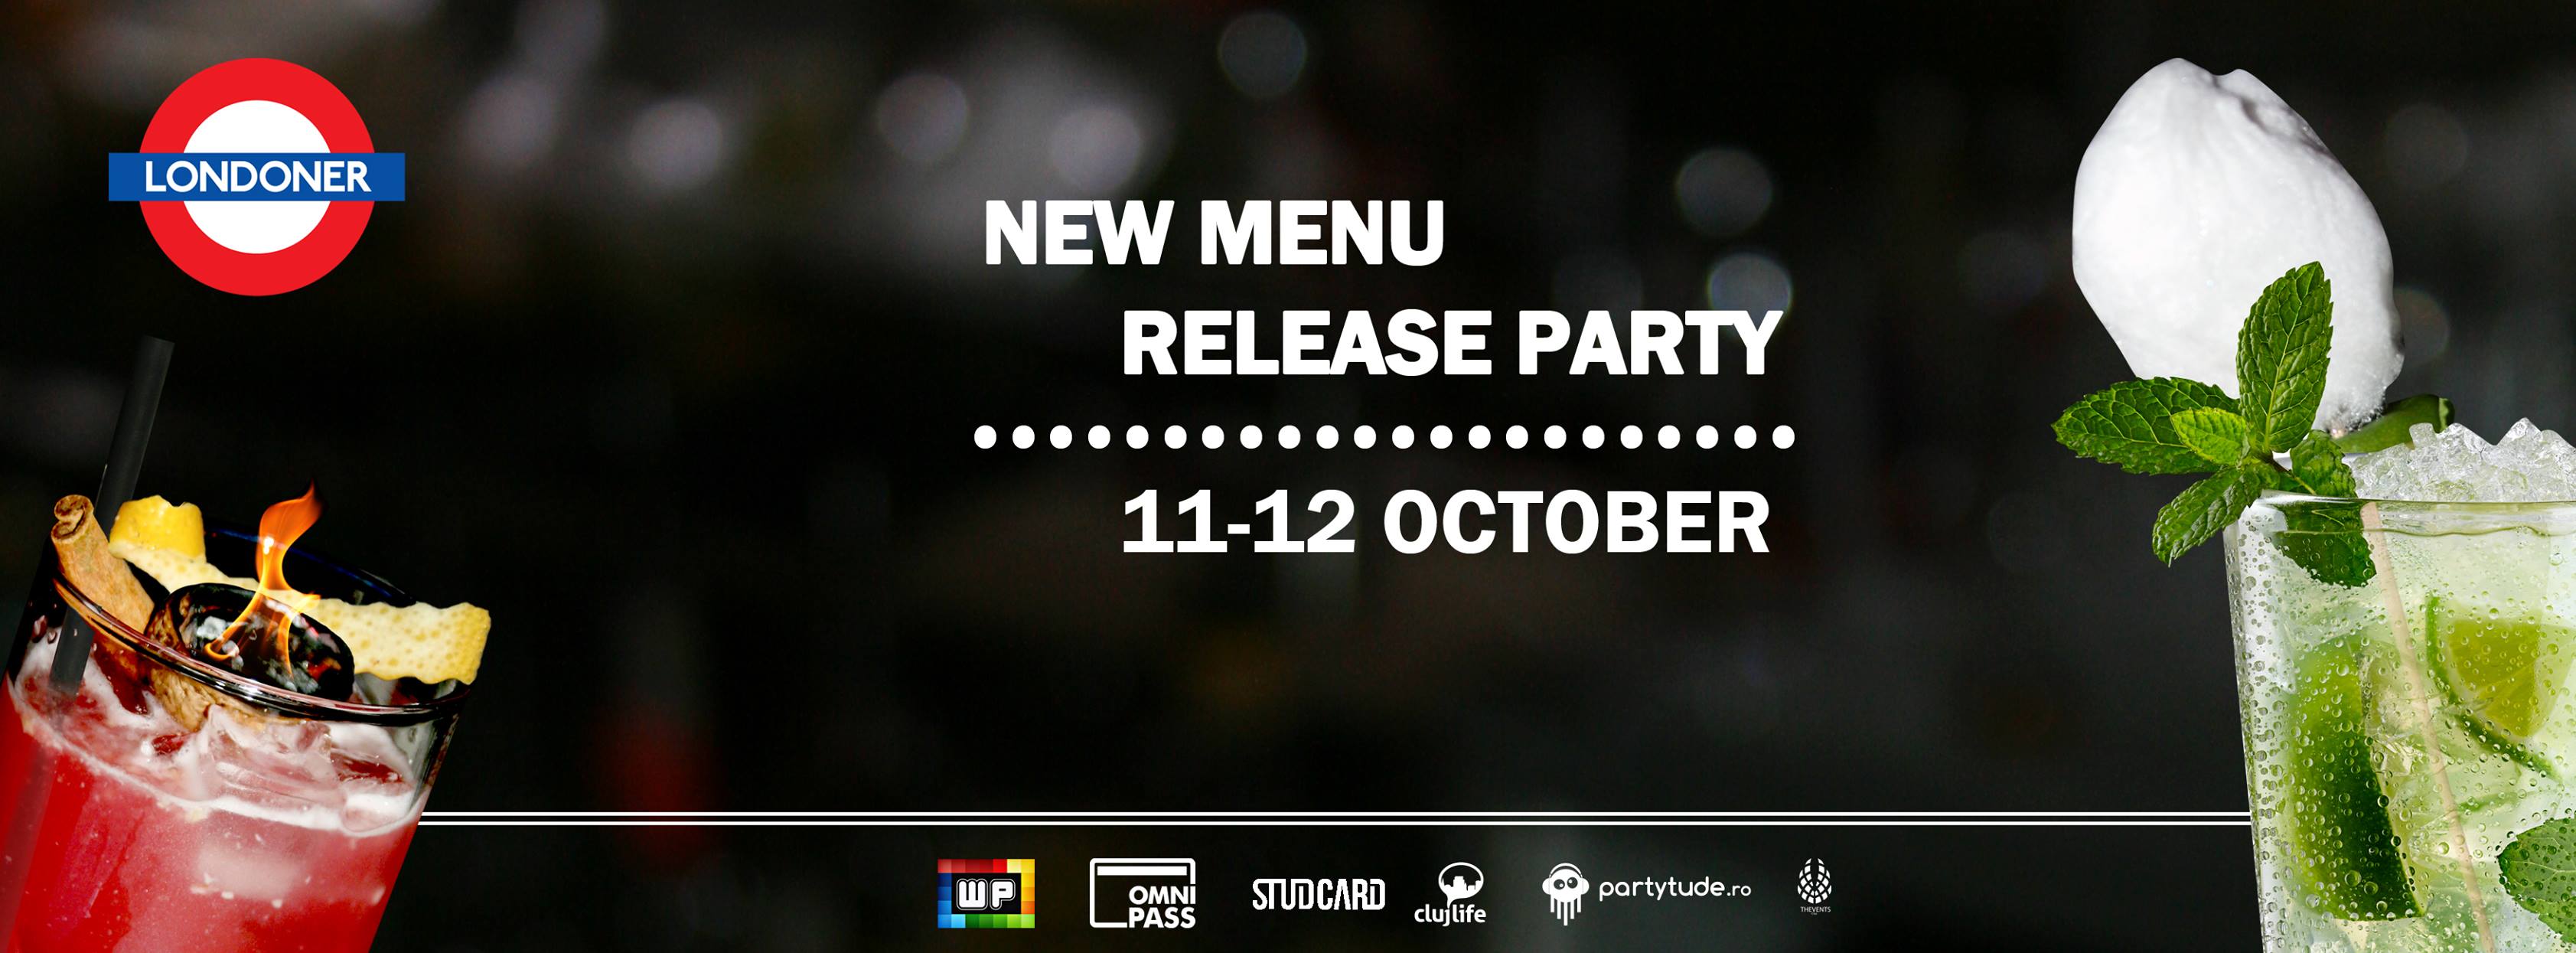 New Menu Release Party @ Londoner Pub